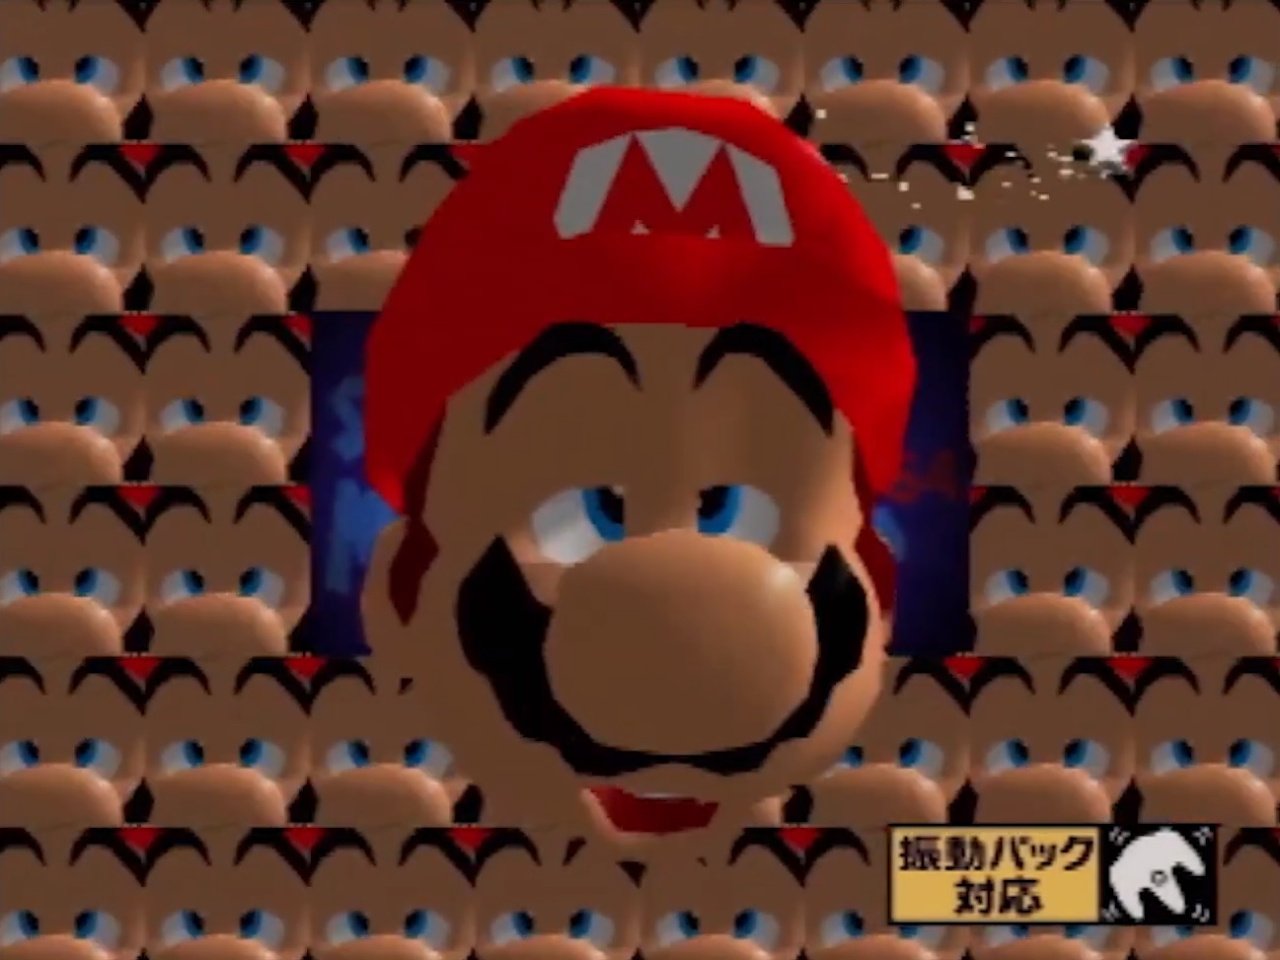 What made Super Mario 64 so special?